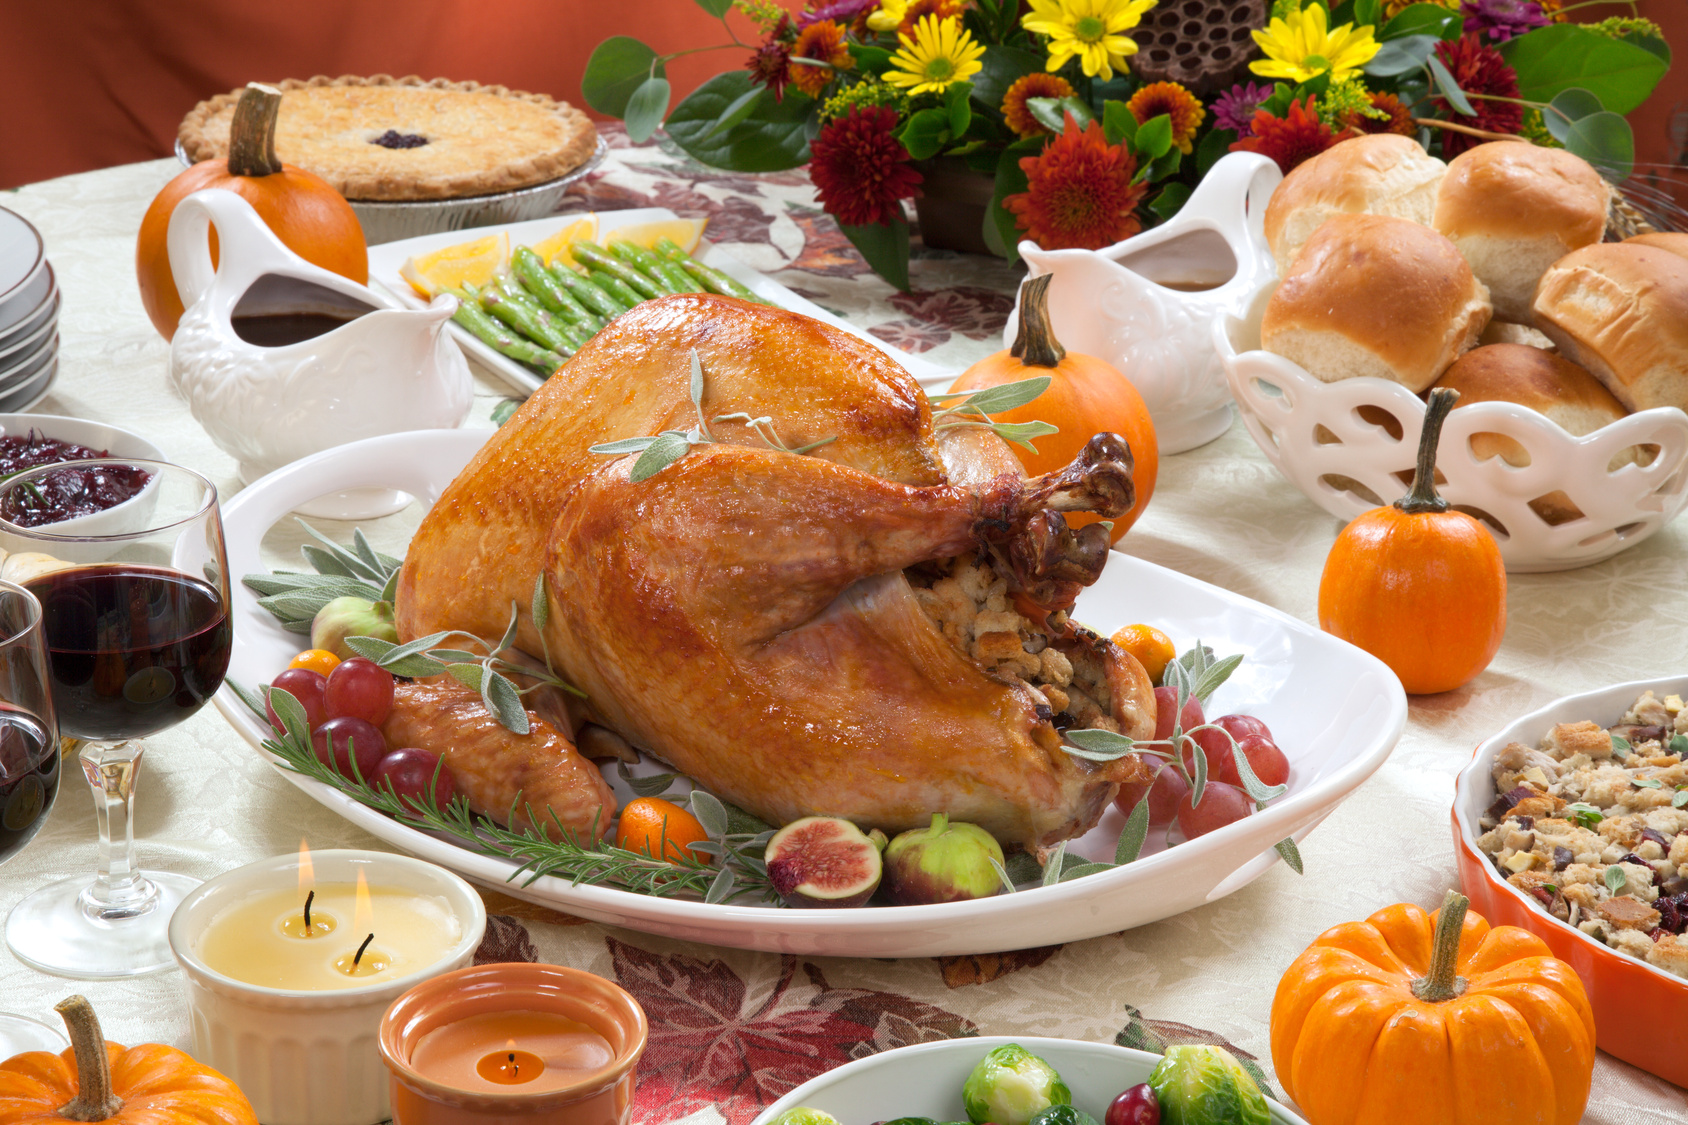 Roasted Turkey on Harvest Table | Wasatch Shutter